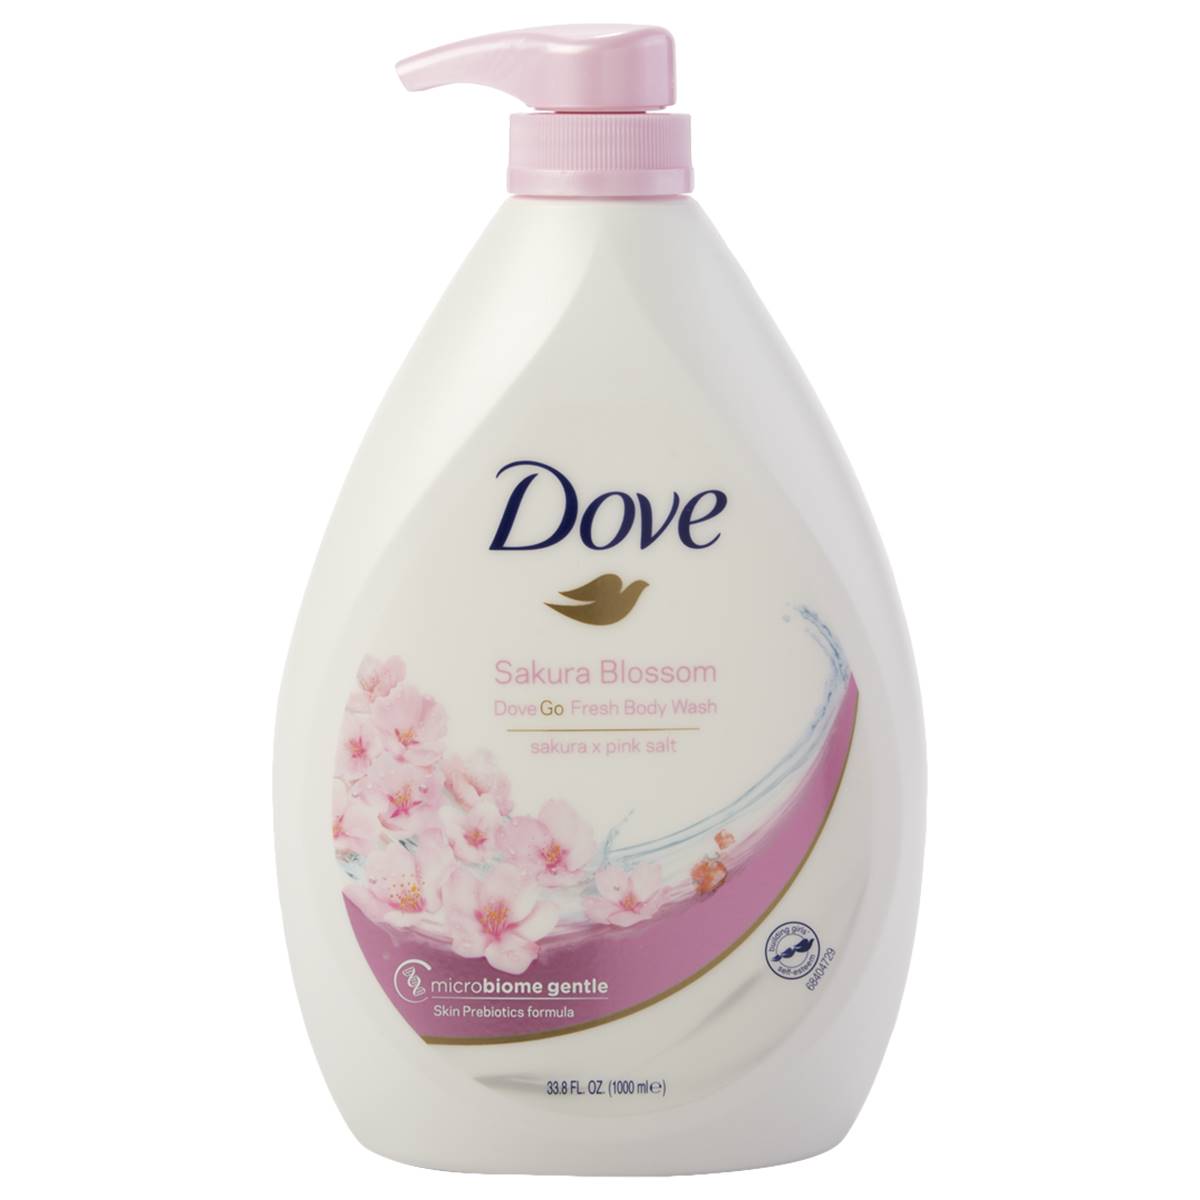 Dove Sakura & Pink Salt Body Wash